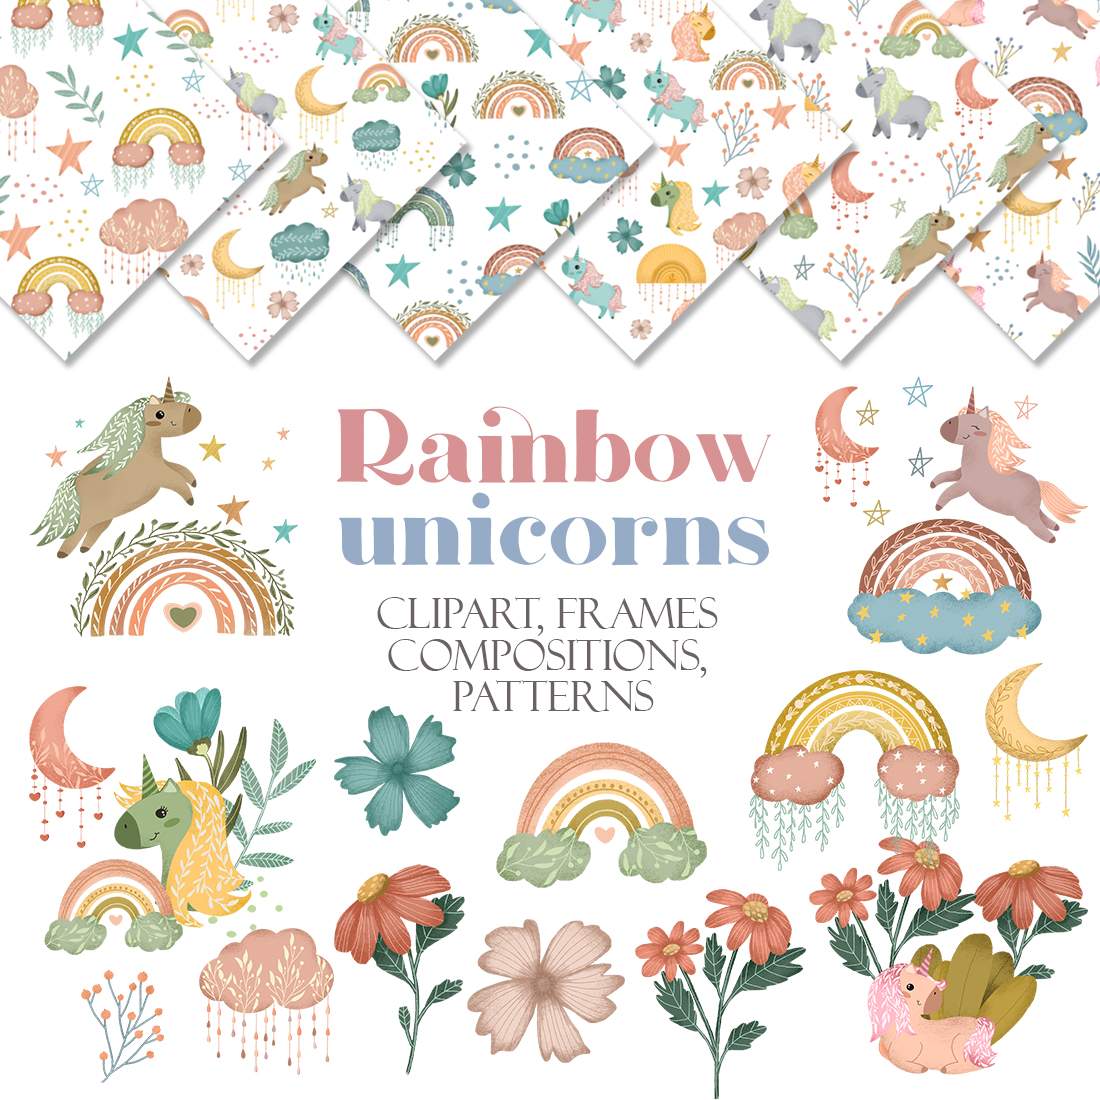 Rainbow unicorn clipart pattern set cover image.